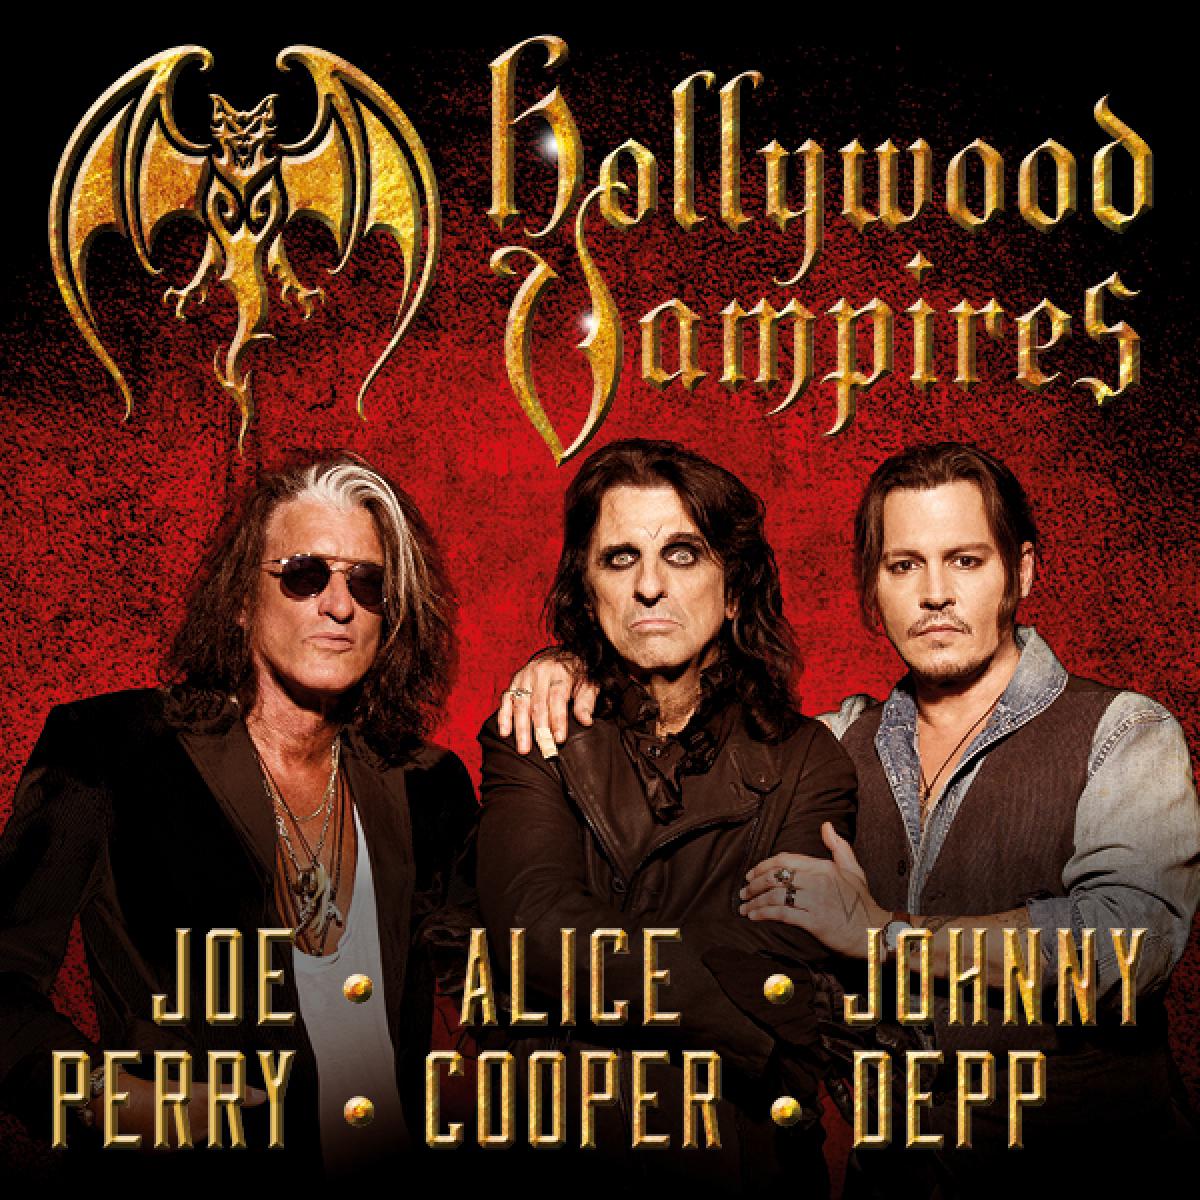 hollywood vampires tour poster